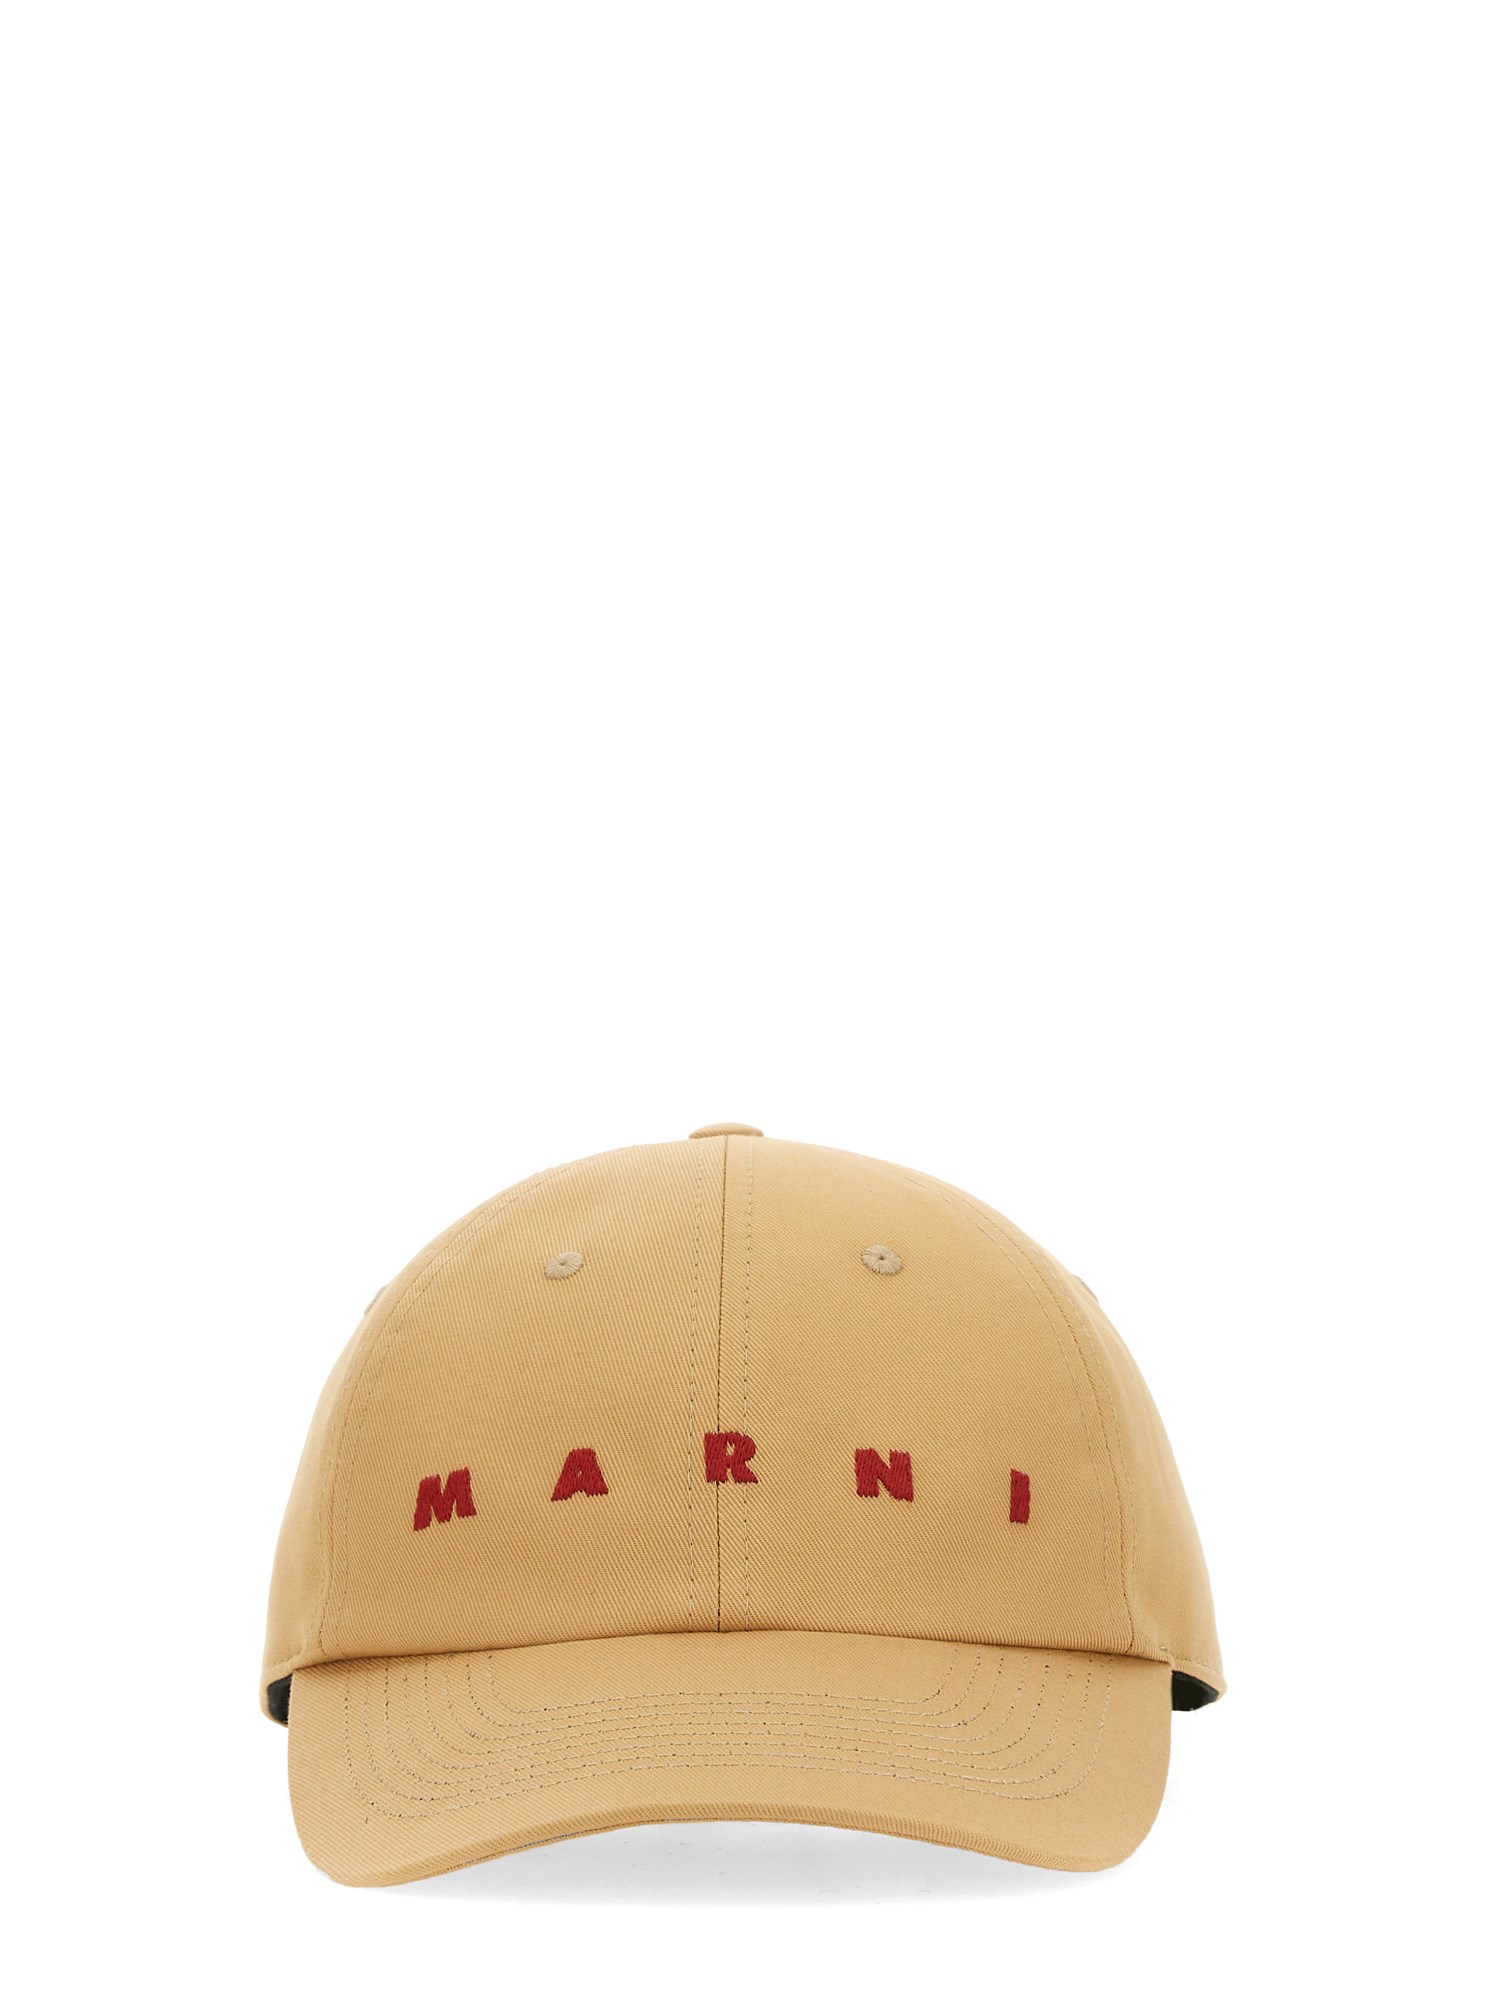 marni baseball hat with logo